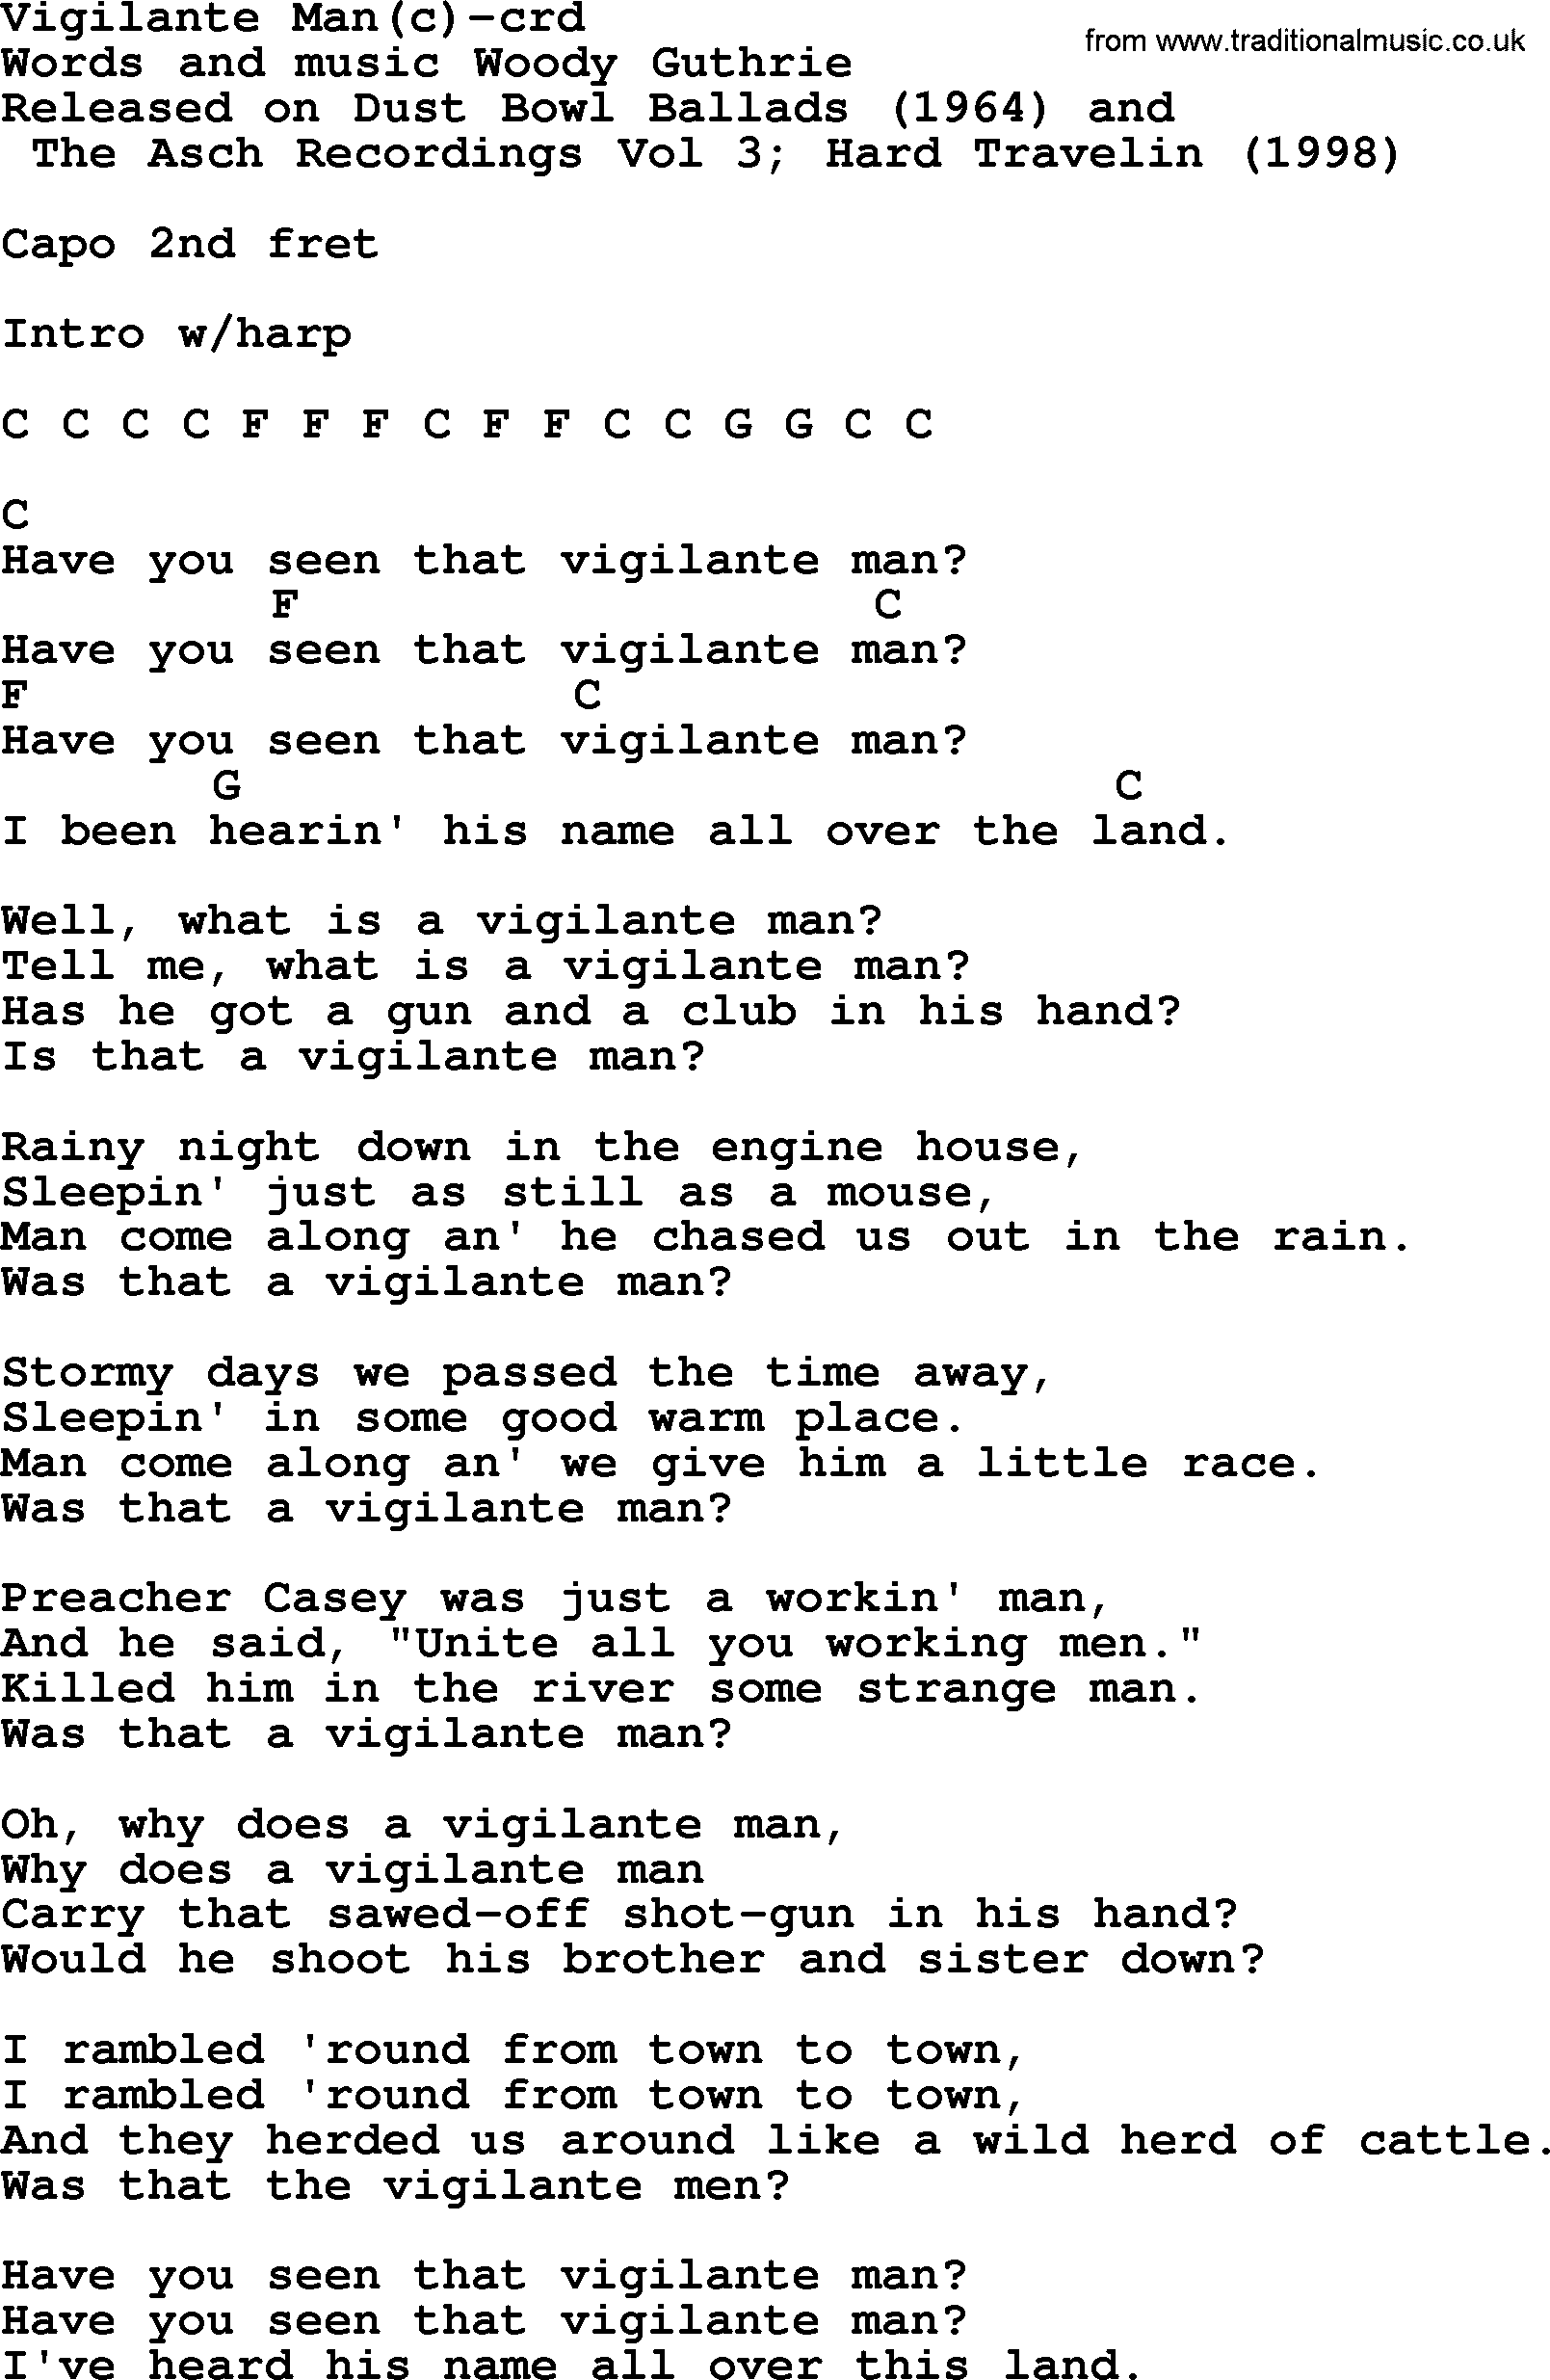 Woody Guthrie song Vigilante Man(c) lyrics and chords